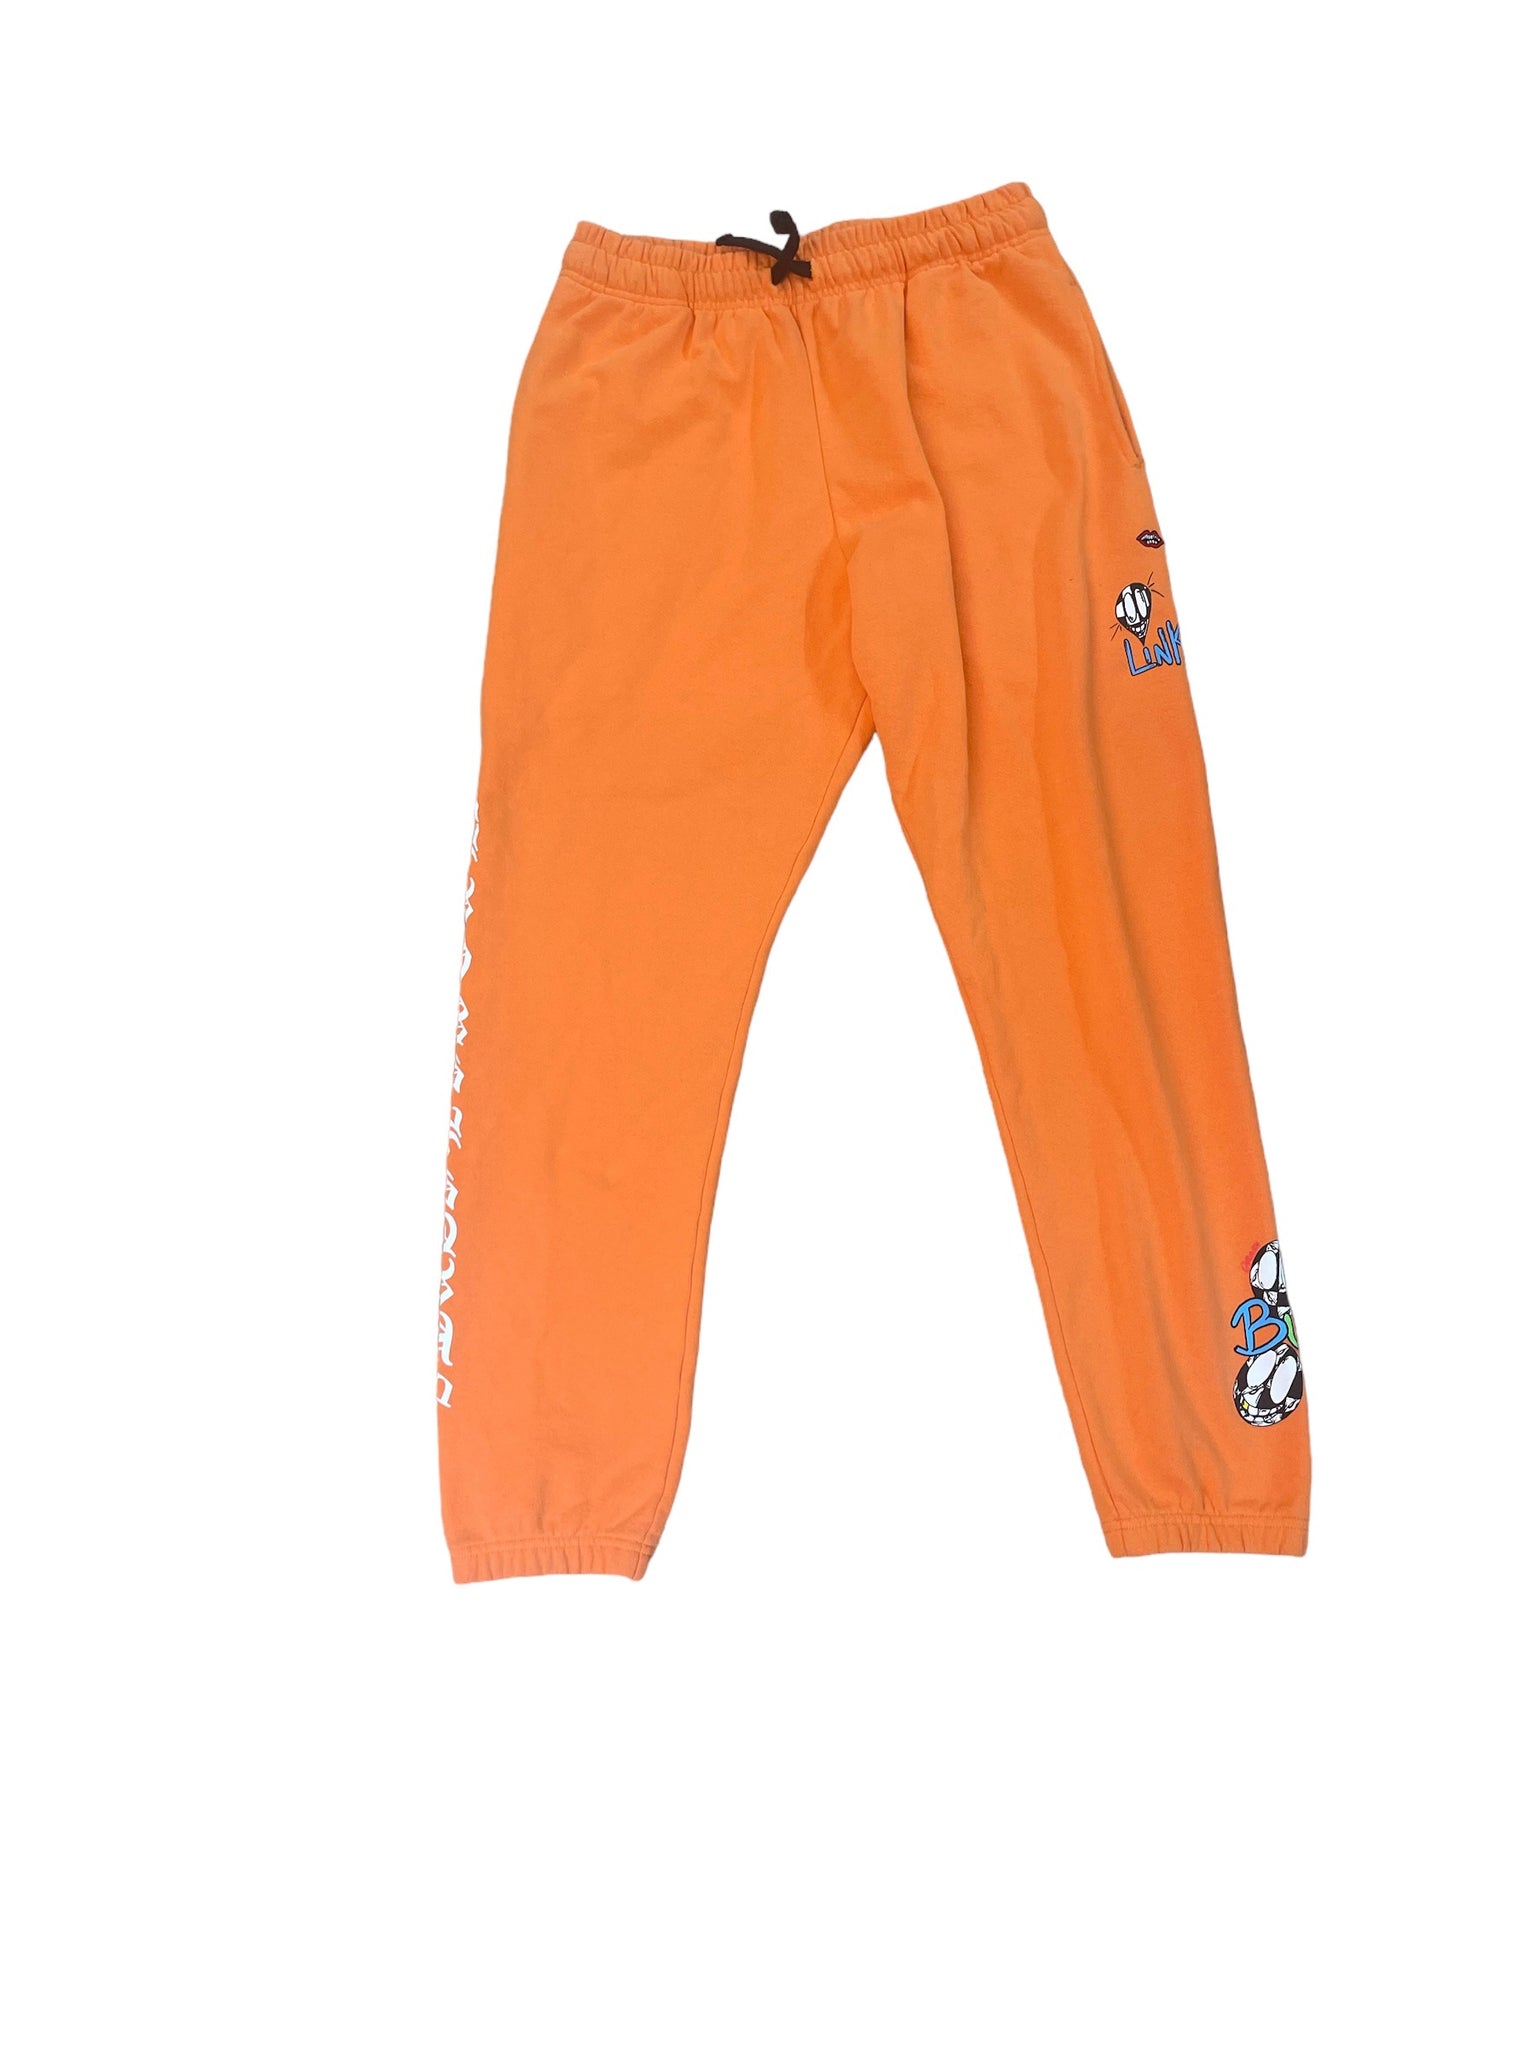 Chrome Hearts Matty Boy Sweatpants "Orange" (Pre-Owned)